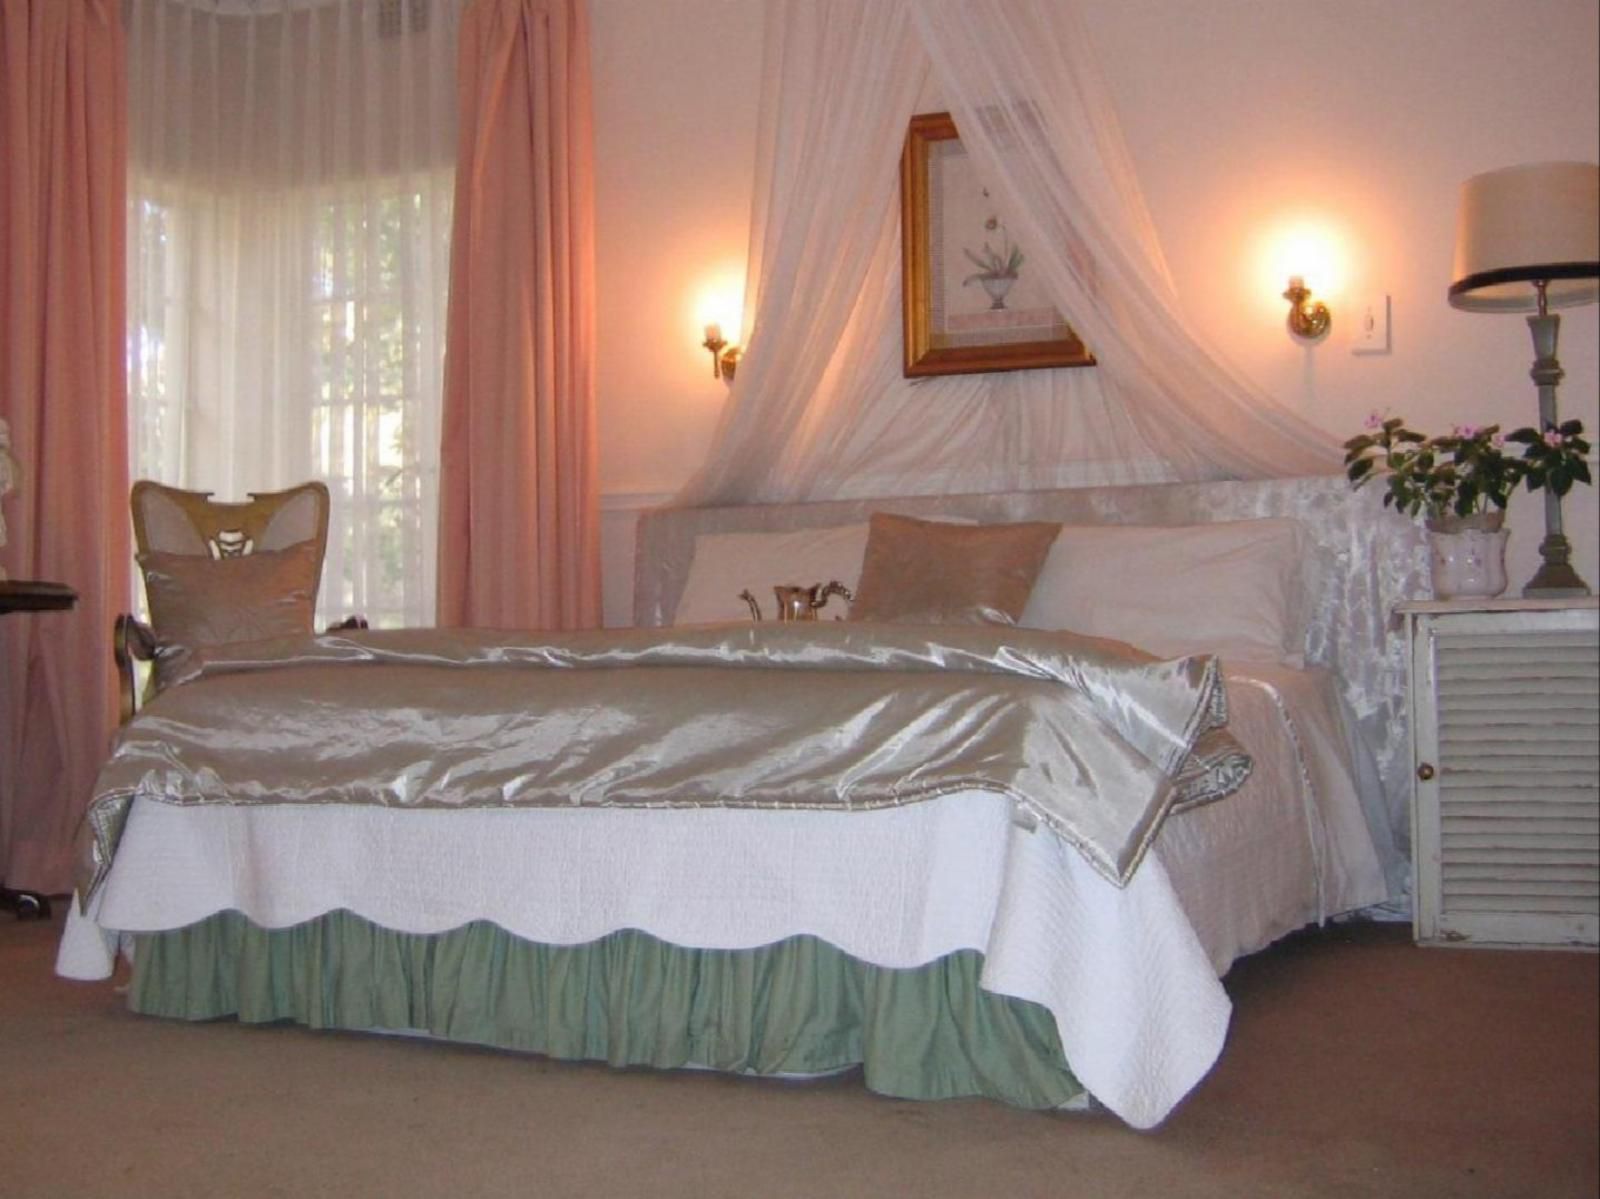 Villa Victoria Executive Guesthouse Westdene Benoni Johannesburg Gauteng South Africa Bedroom